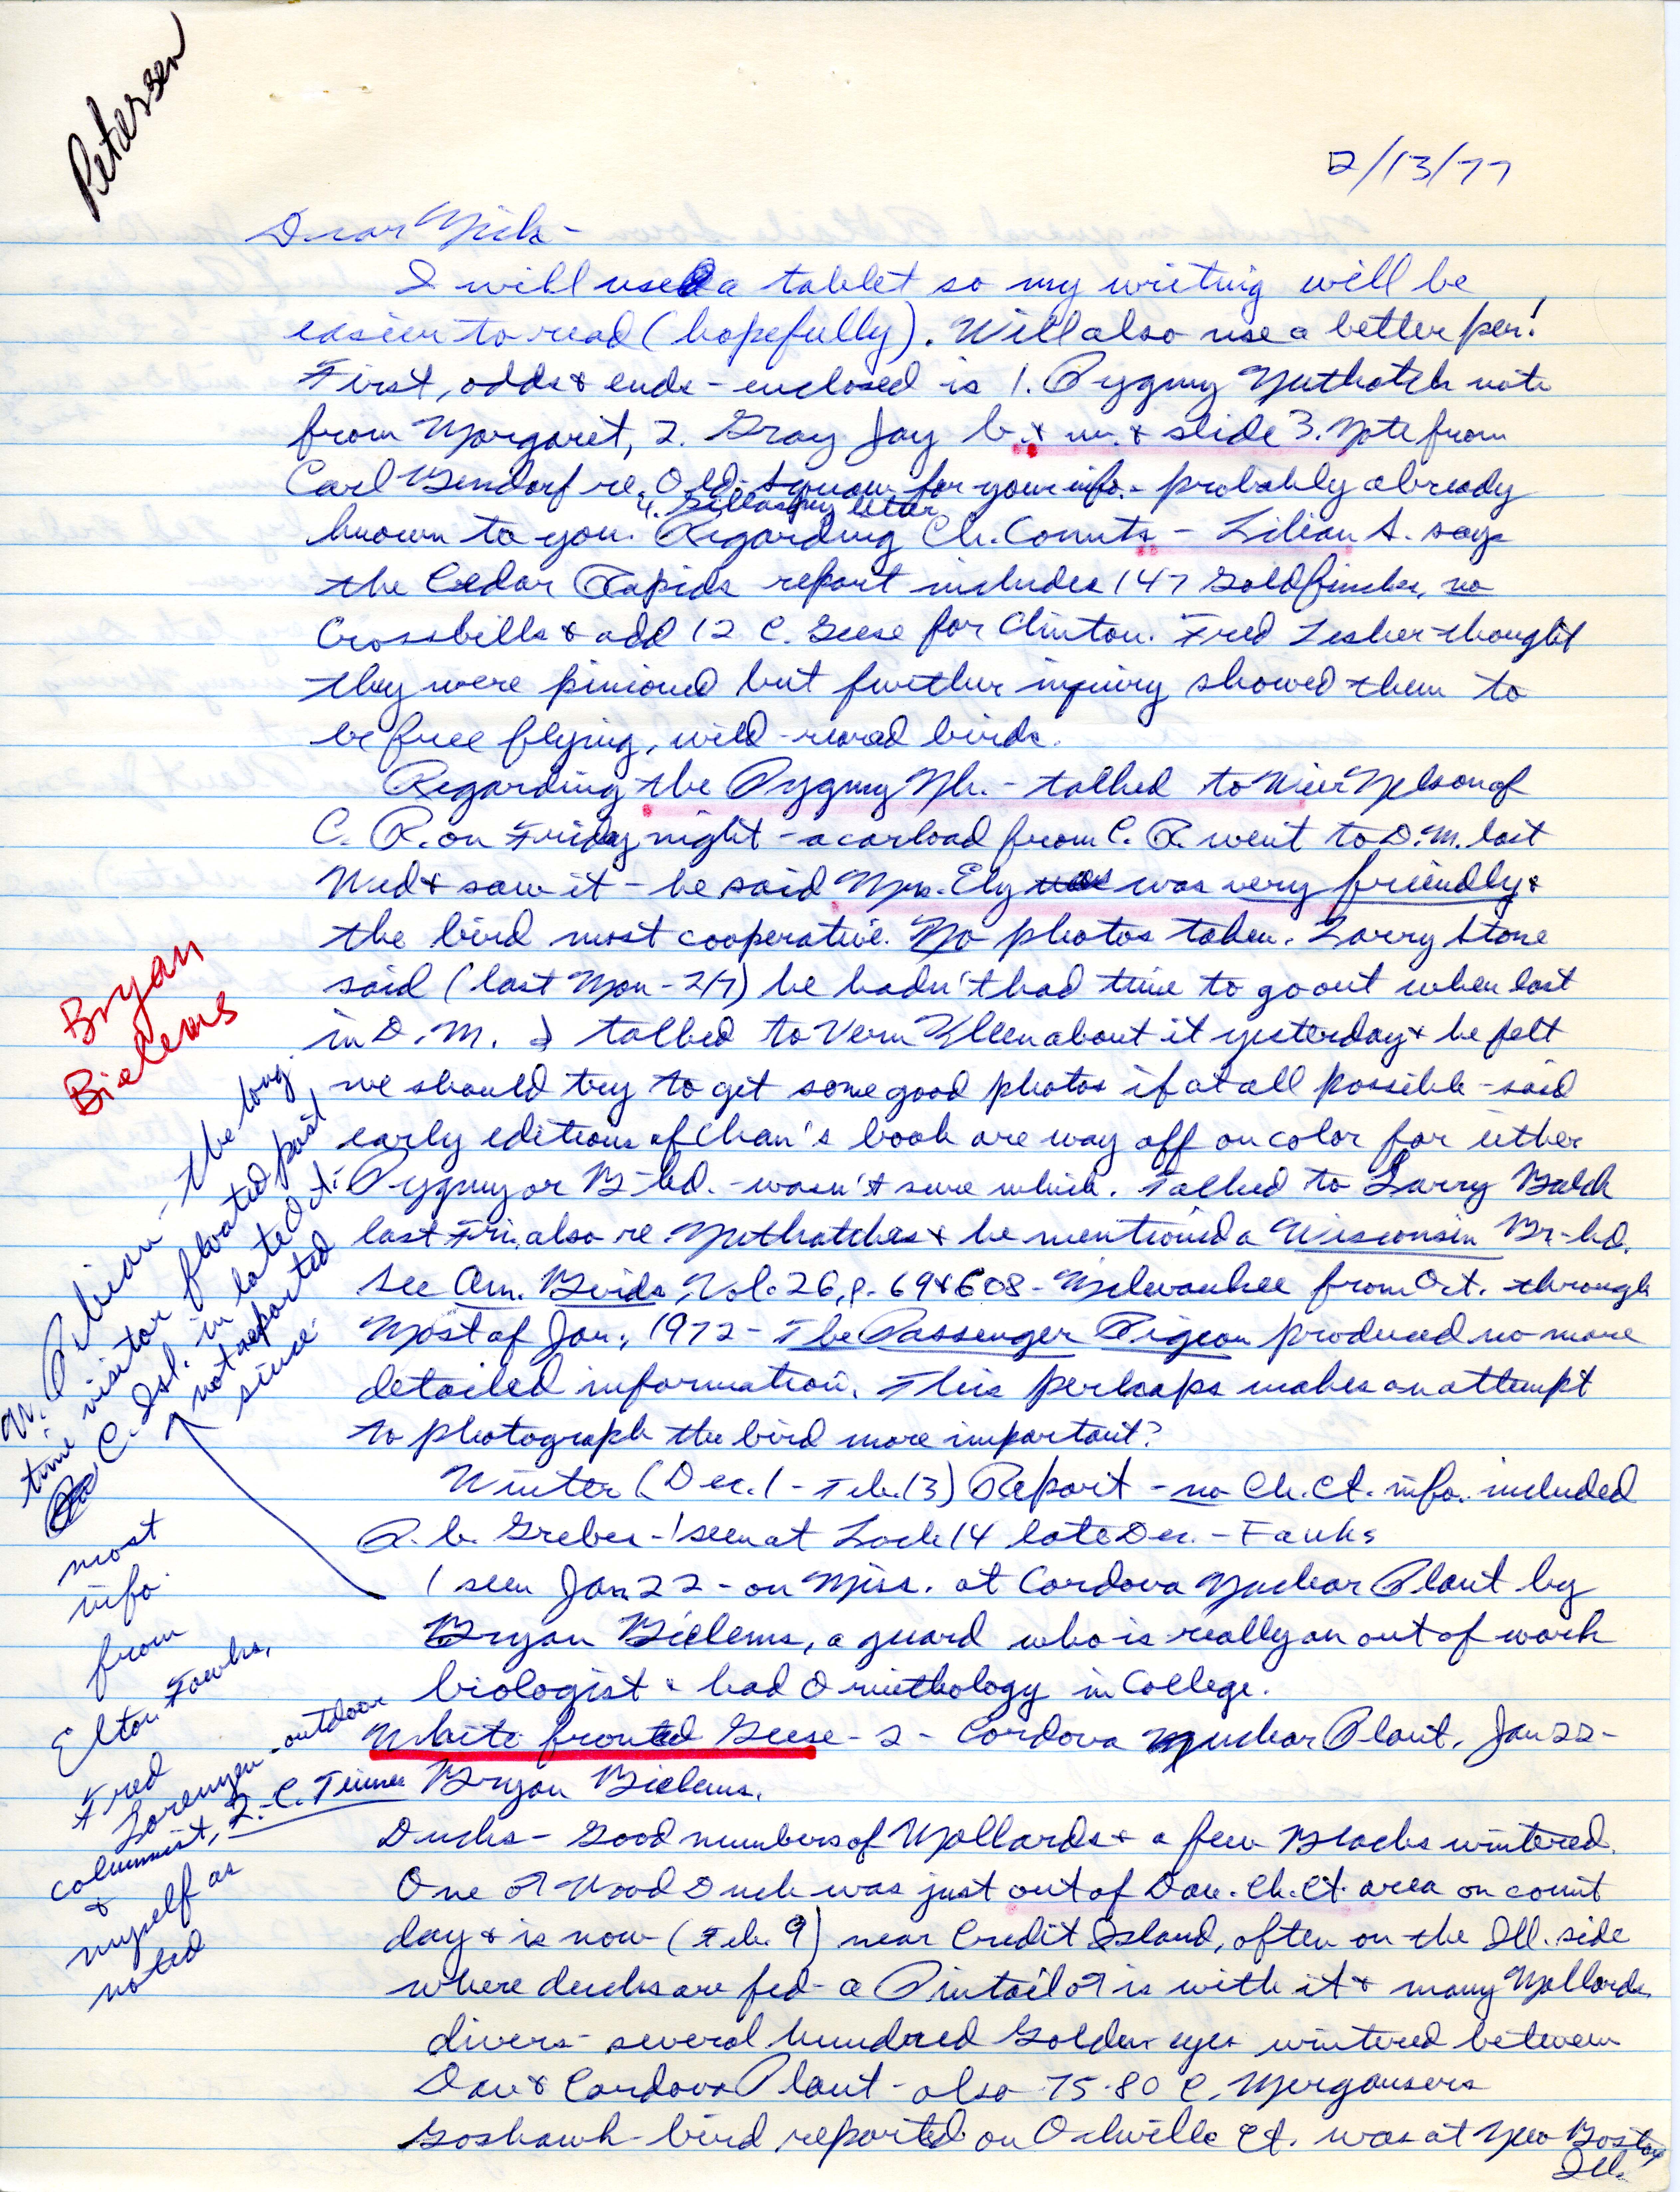 Peter C. Petersen letter to Nicholas S. Halmi regarding bird sightings, February 13, 1977